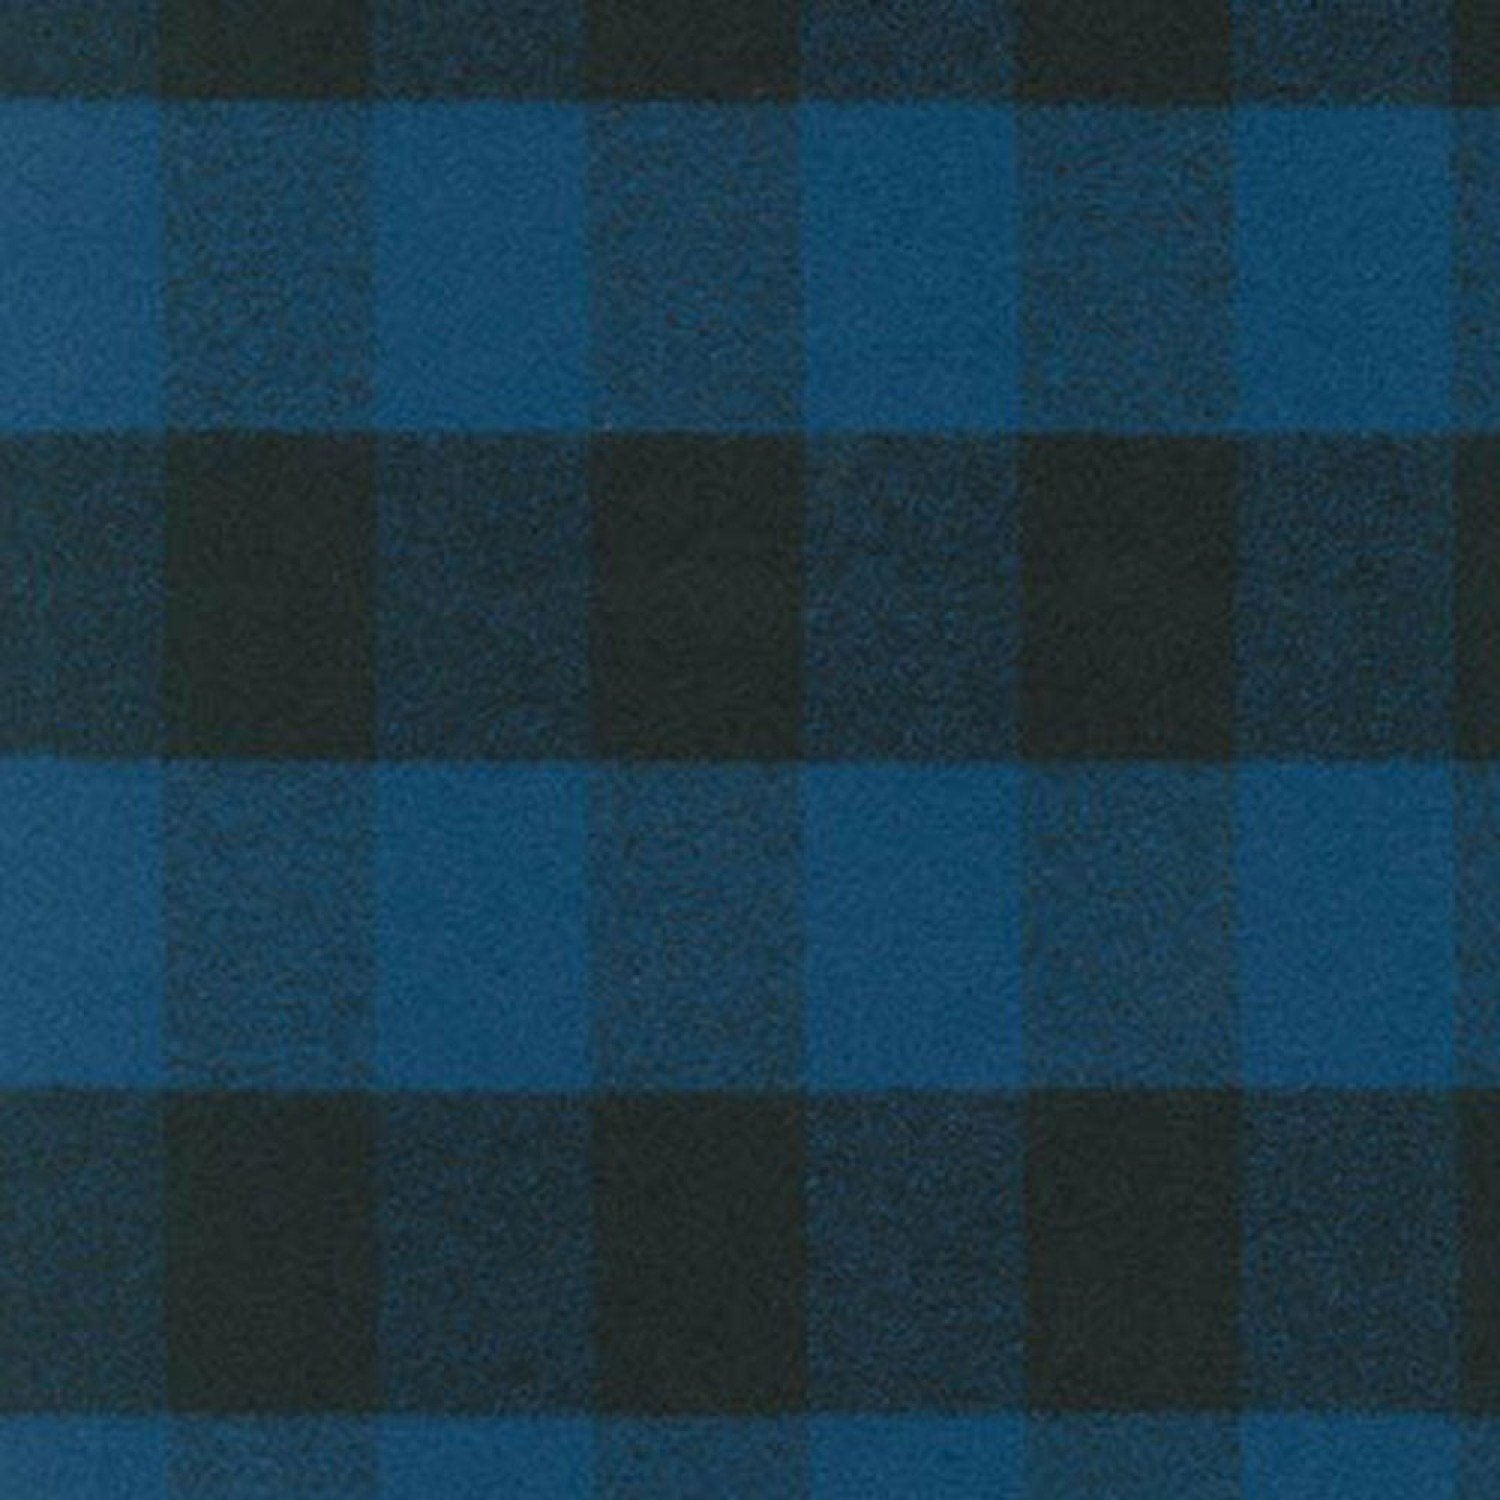 Blue and Black Buffalo Plaid Robert Kaufman Mammoth Flannel Fabric, Raspberry Creek Fabrics, watermarked, restored